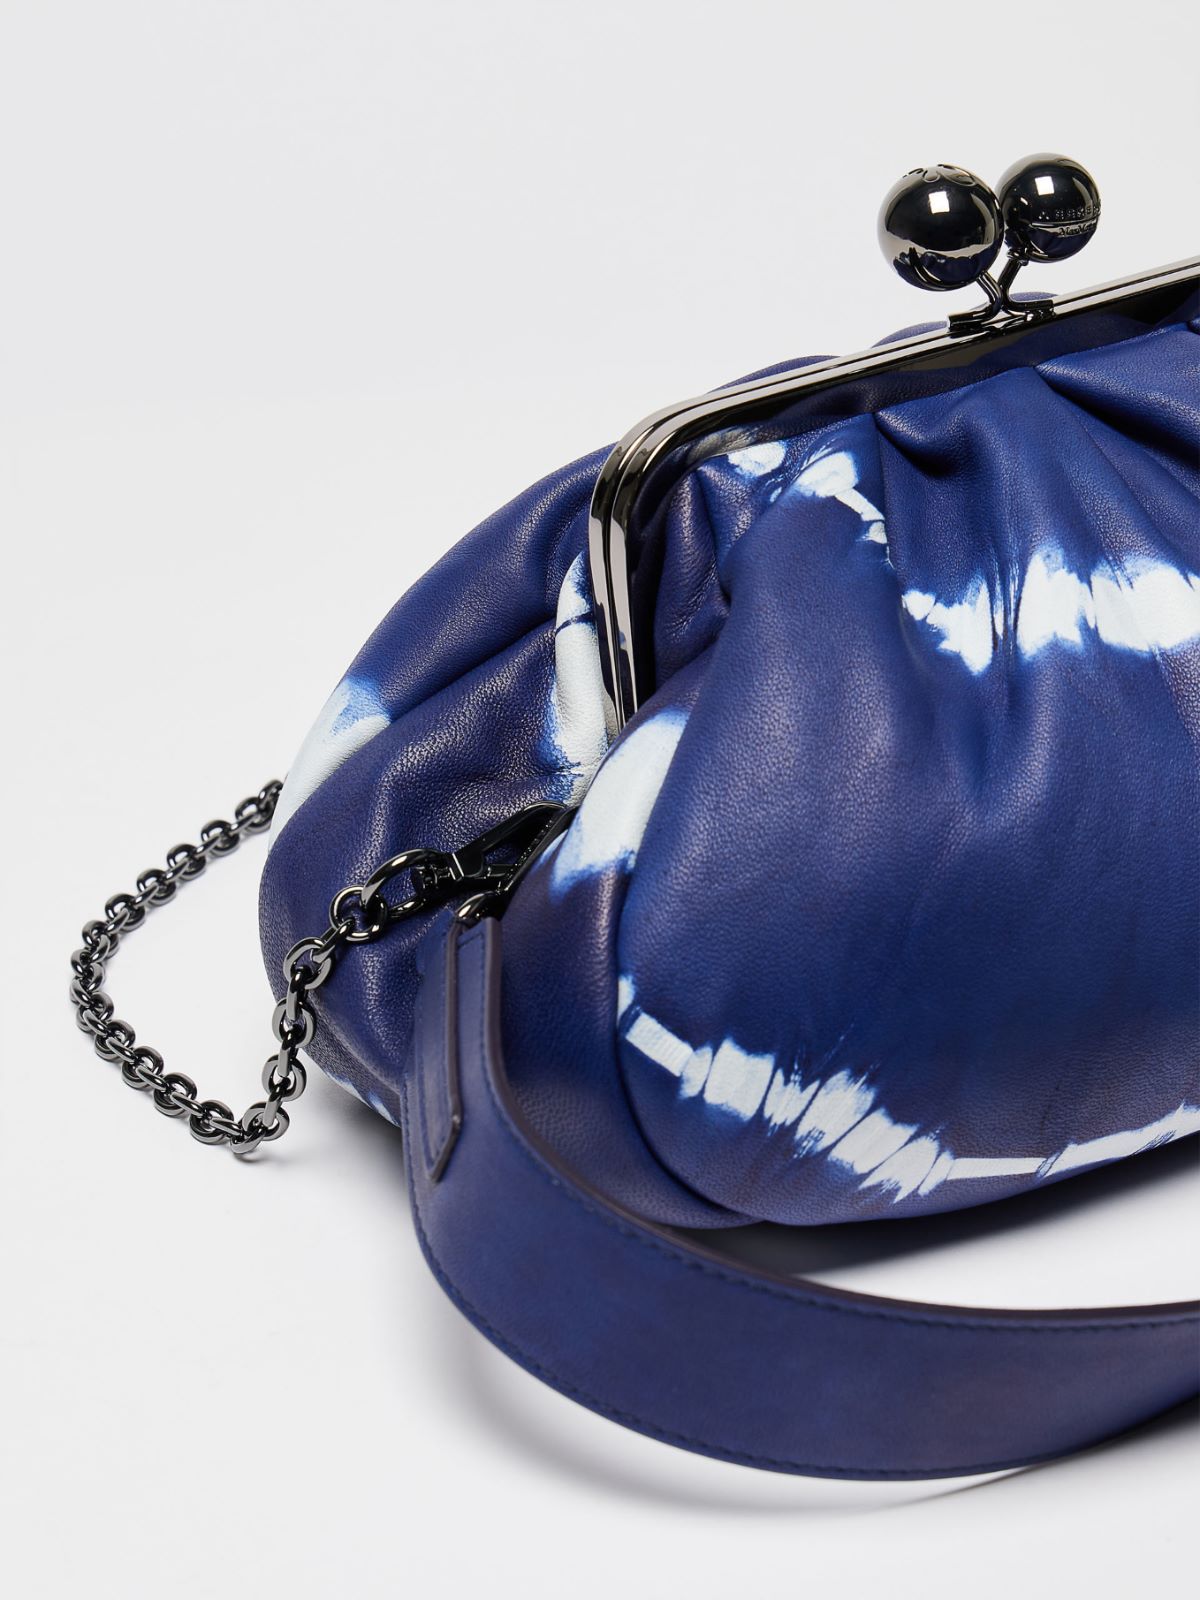 Medium Pasticcino Bag in nappa leather  - CORNFLOWER BLUE - Weekend Max Mara - 4